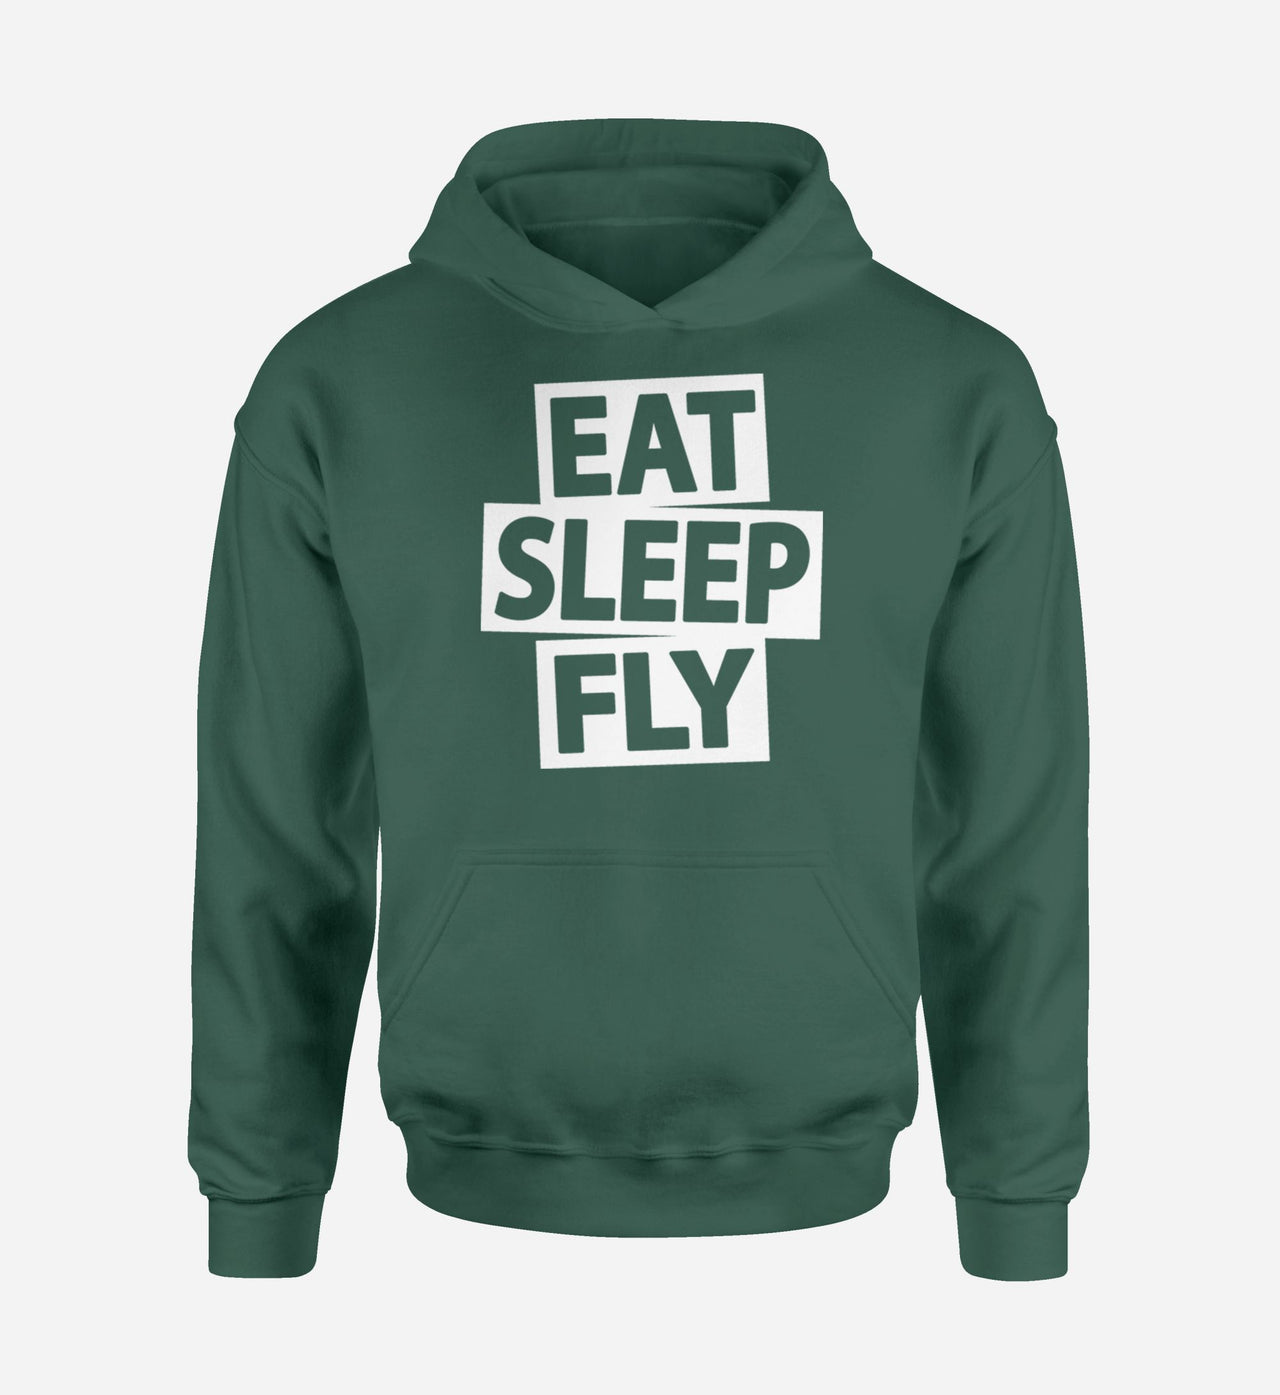 Eat Sleep Fly Designed Hoodies